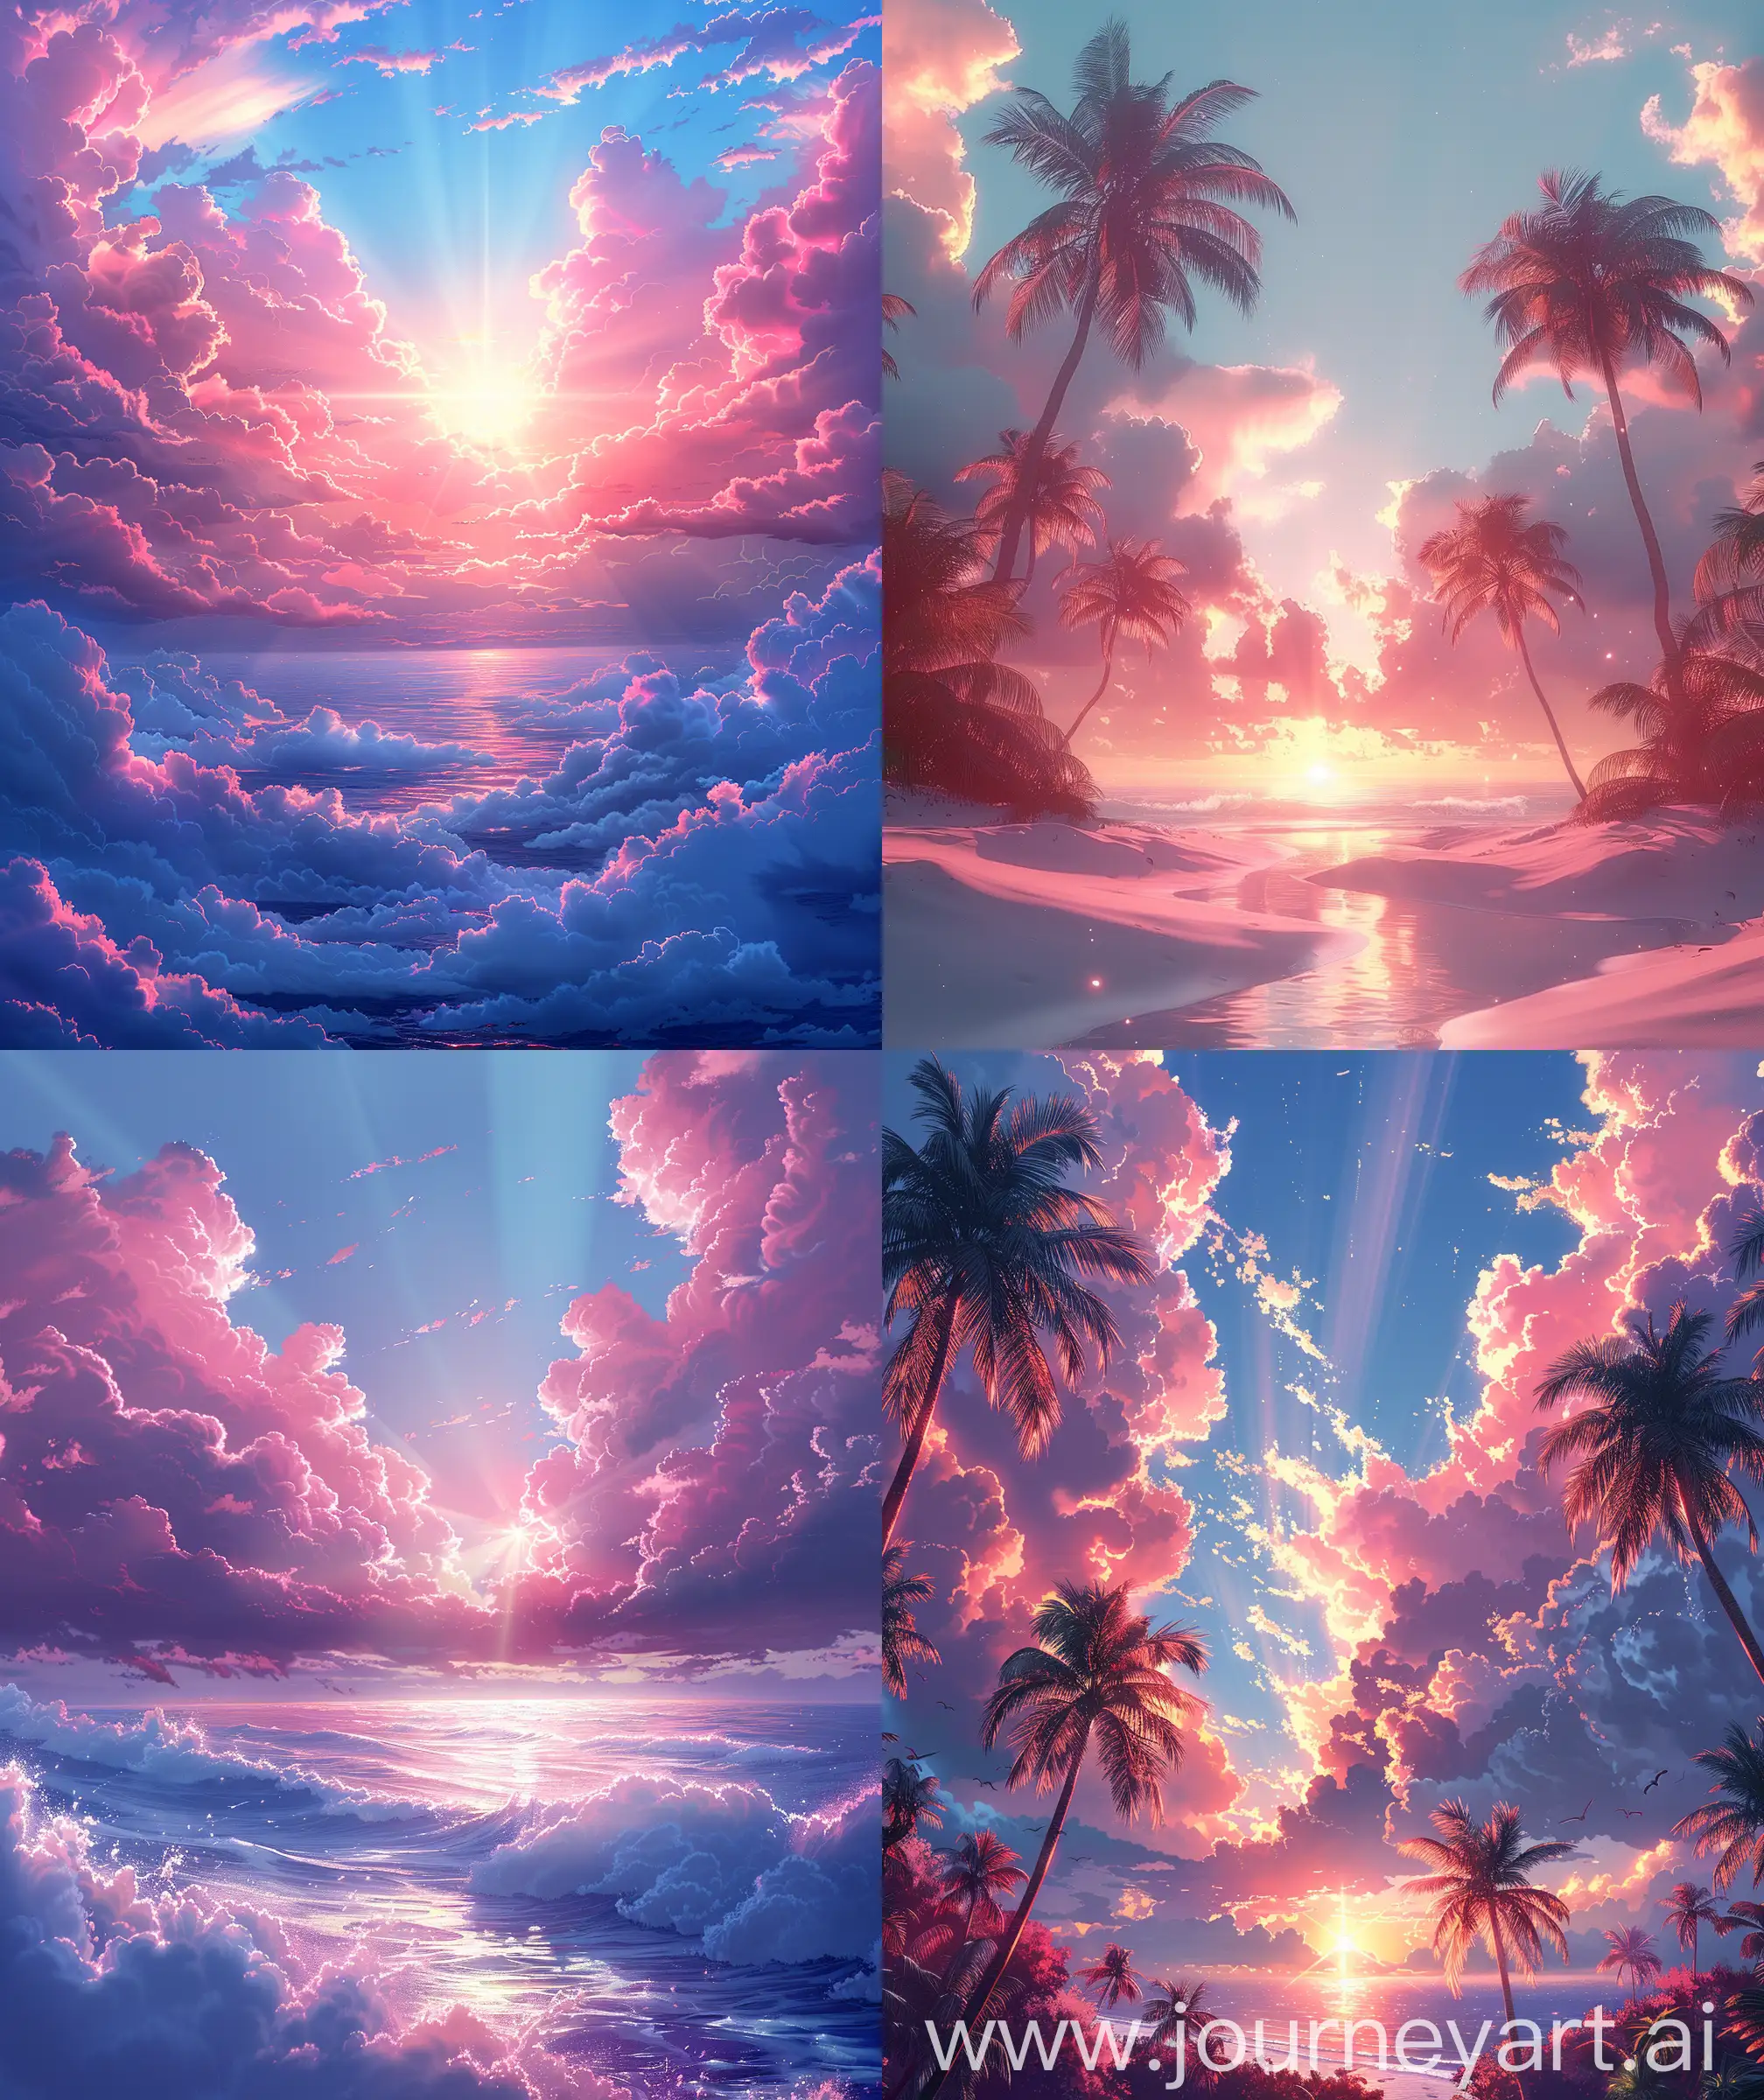 Vibrant-Miami-Anime-Scenery-Sunlit-Sky-in-Stunning-Gradient